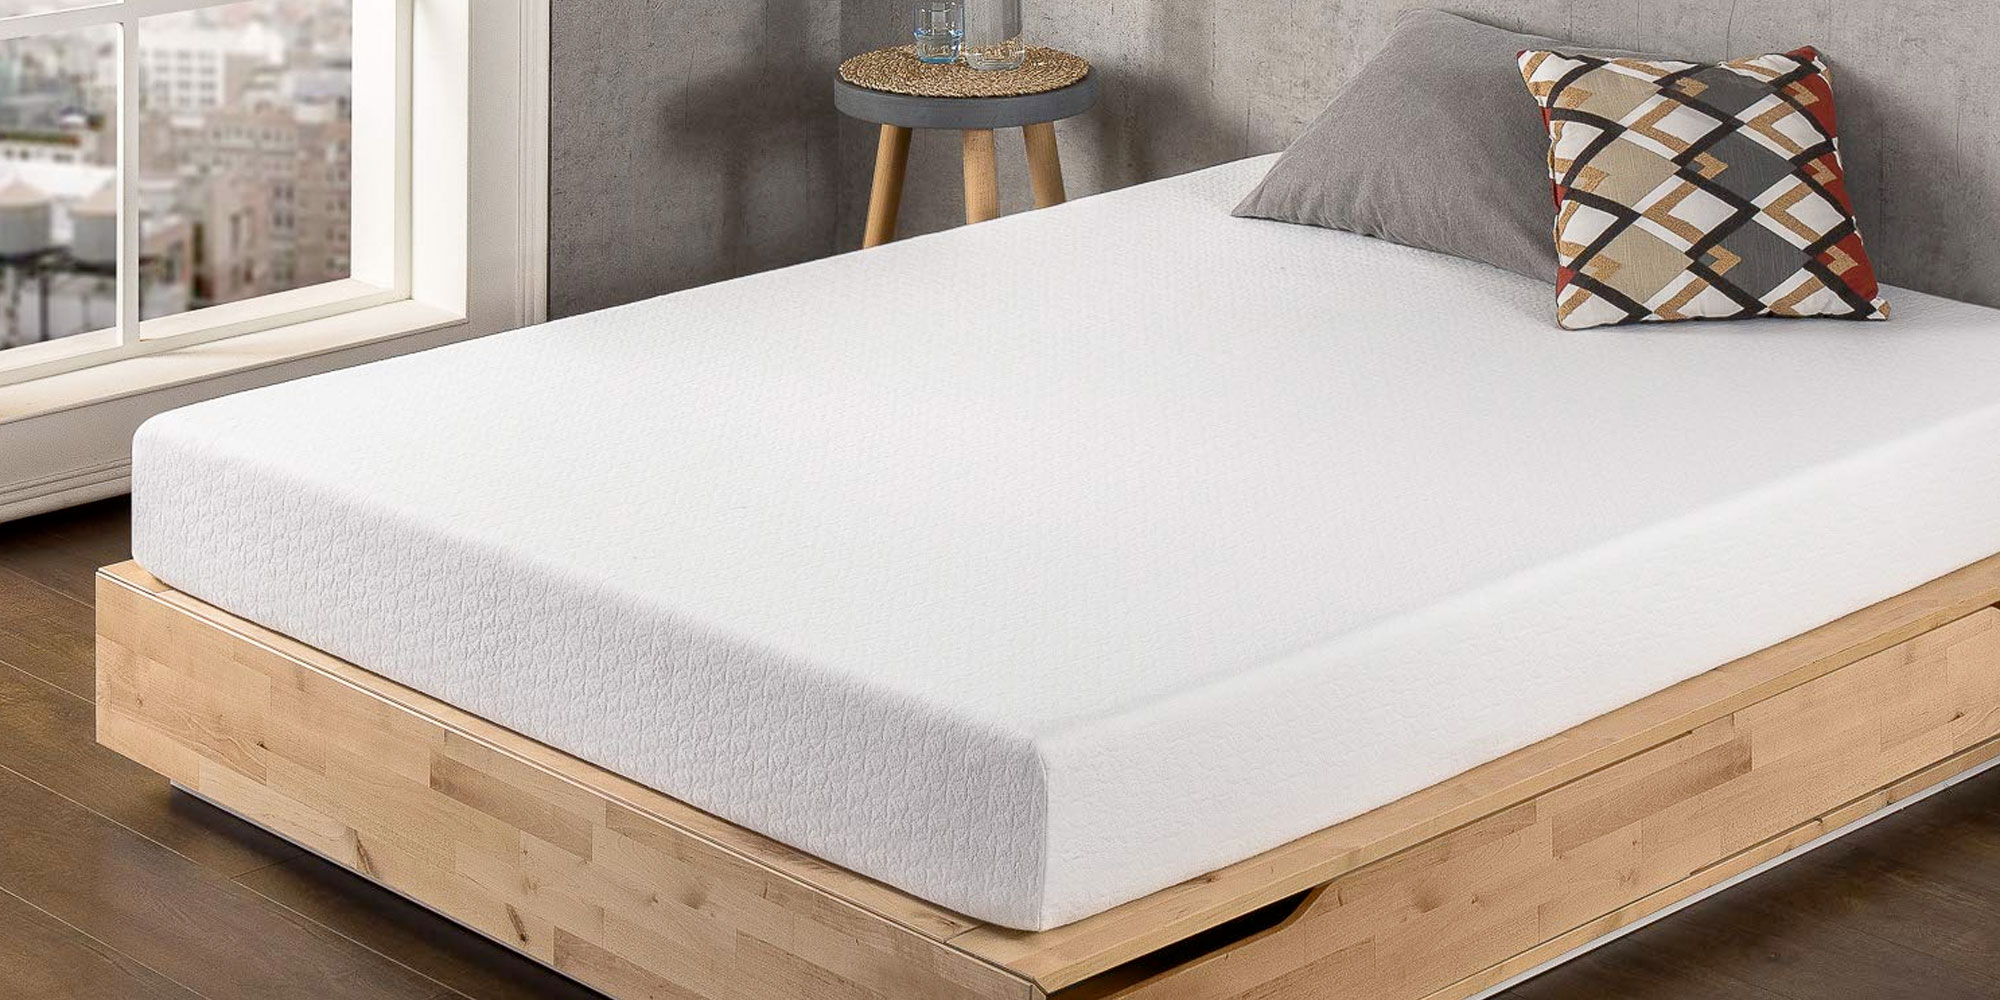 best price mattress 8 inch memory foam